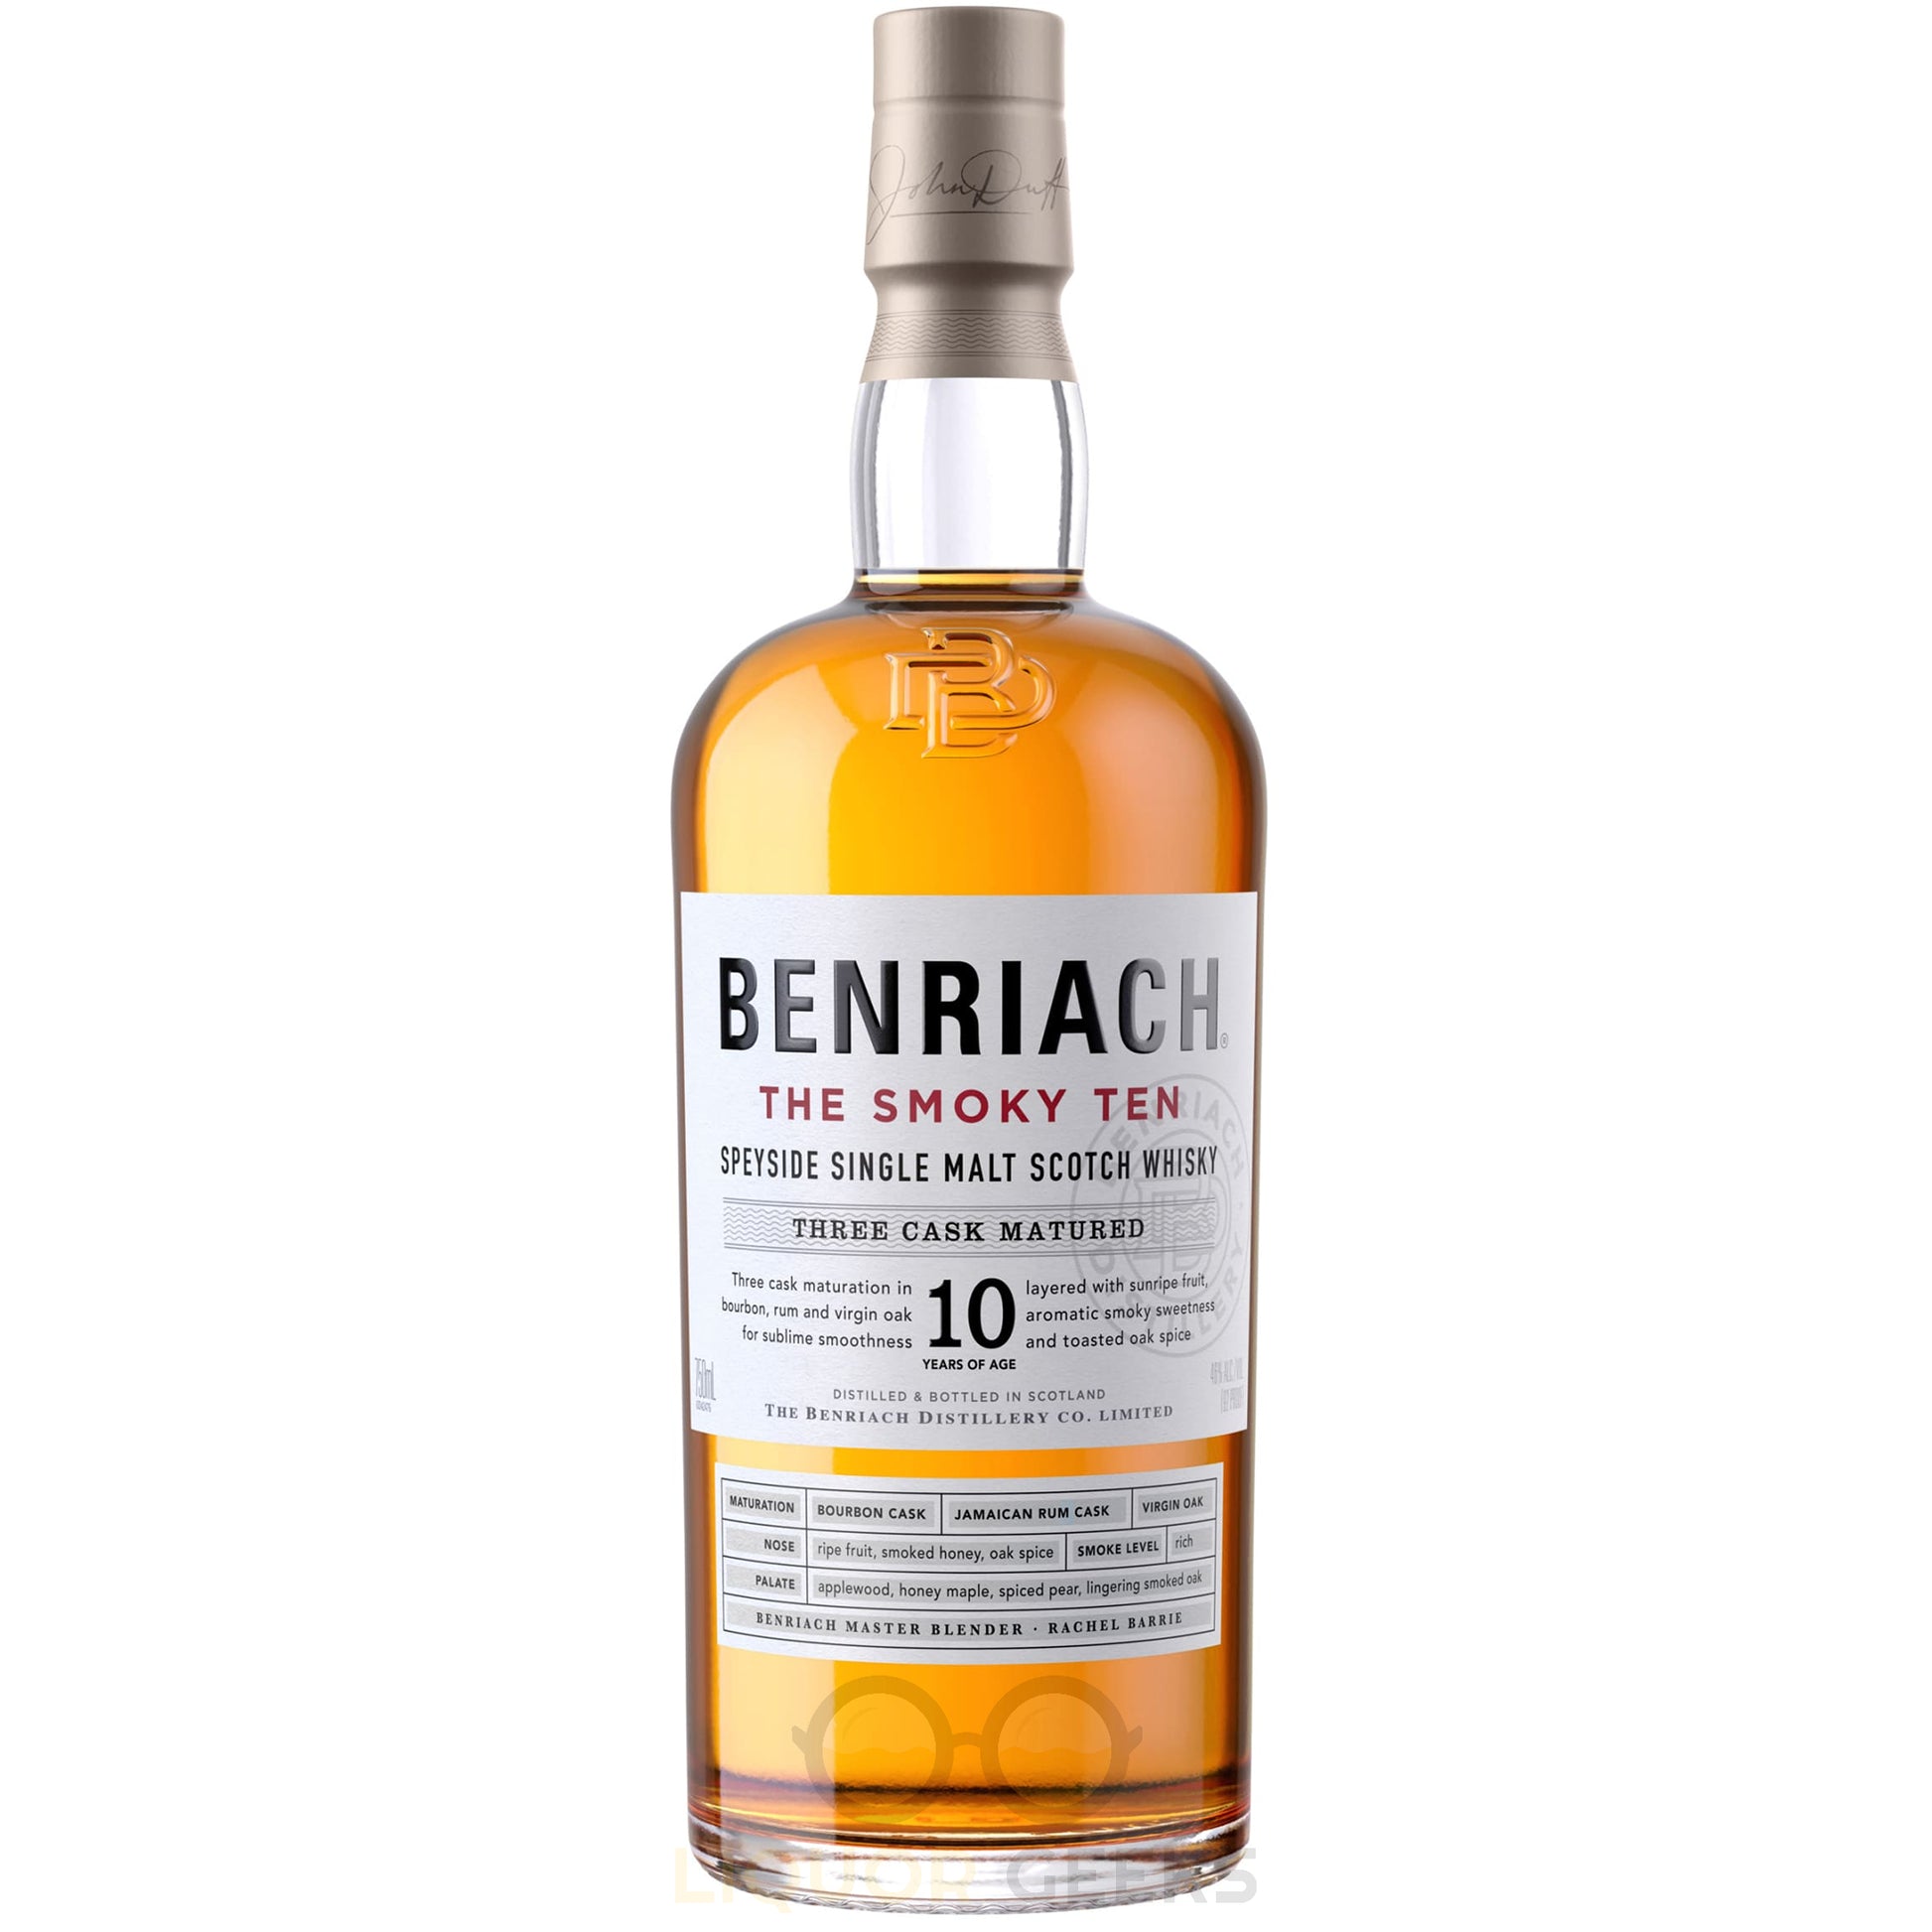 Benriach The Smoky Ten Speyside Single Malt Scotch Whisky - Liquor Geeks